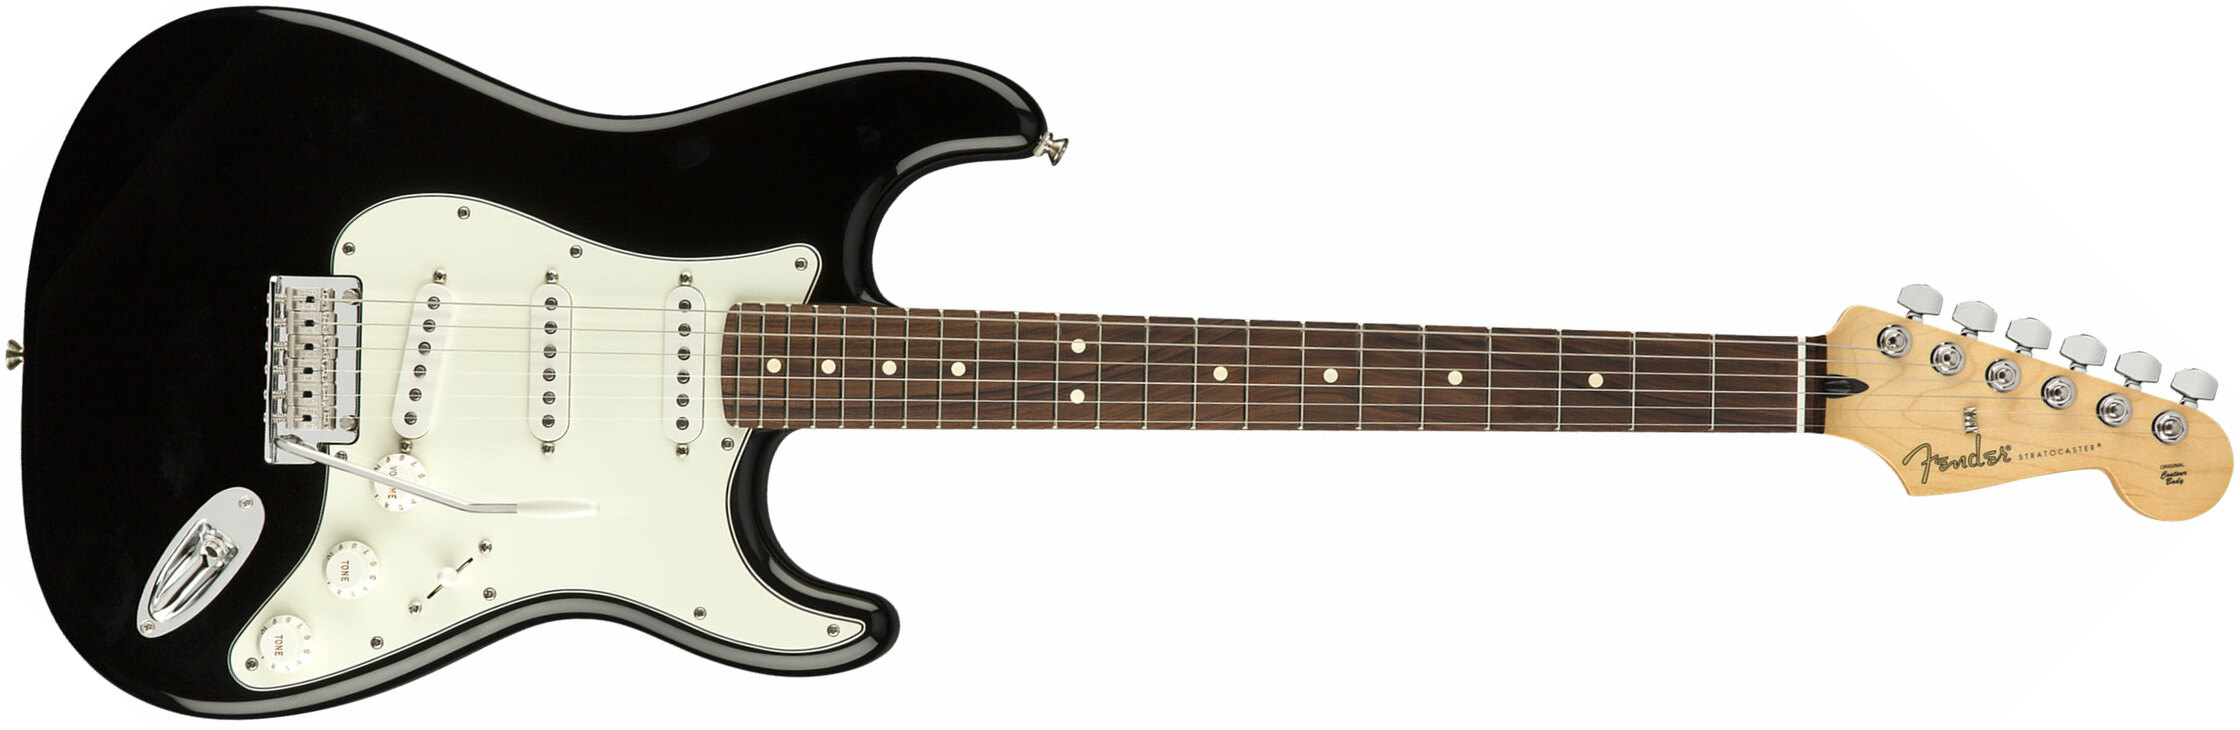 Fender Strat Player Mex Sss Pf - Black - E-Gitarre in Str-Form - Main picture